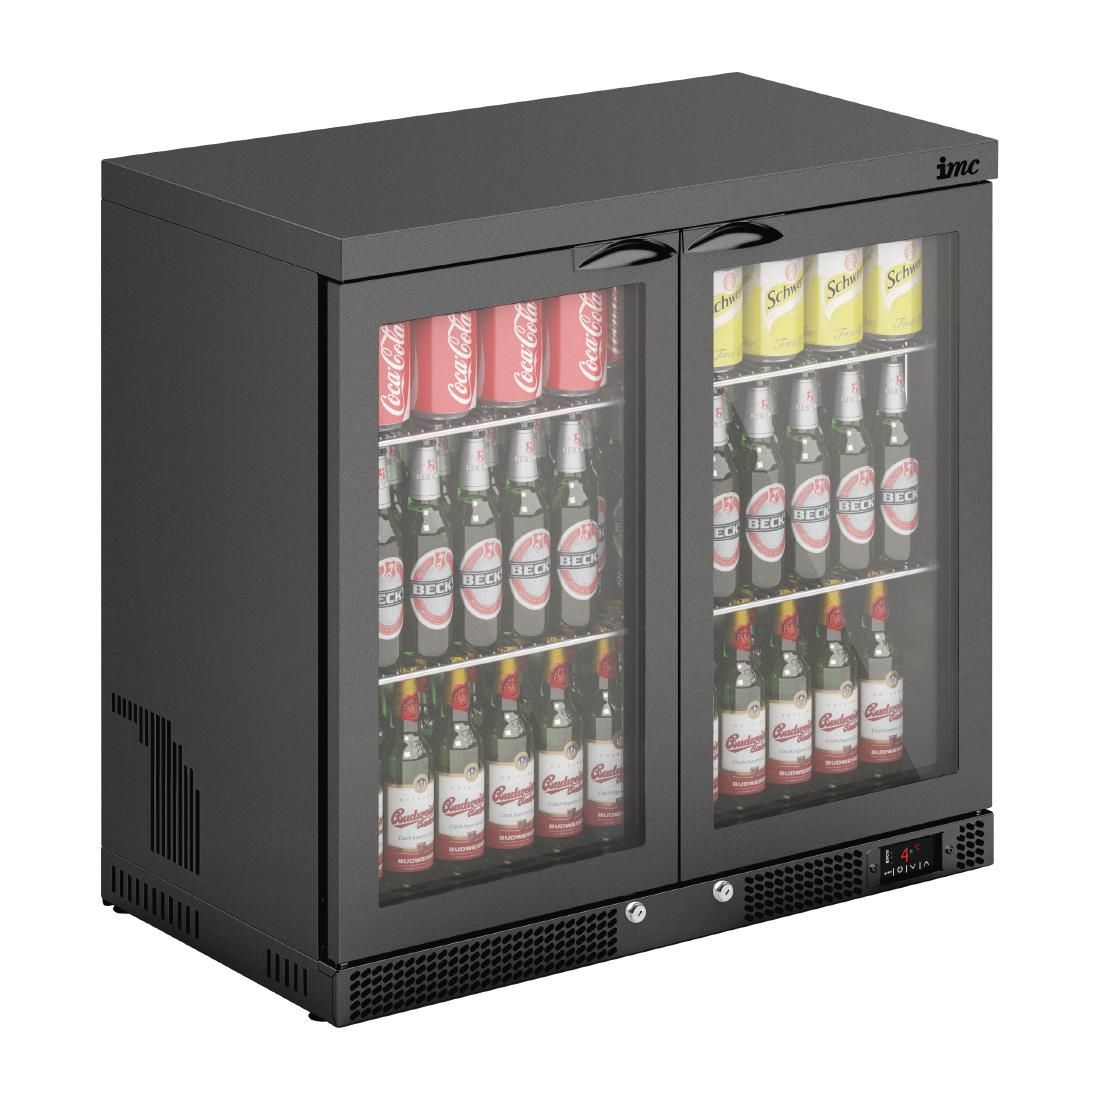 IMC Mistral M90 Double Door Bottle Cooler 185Ltr F77/251B JD Catering Equipment Solutions Ltd